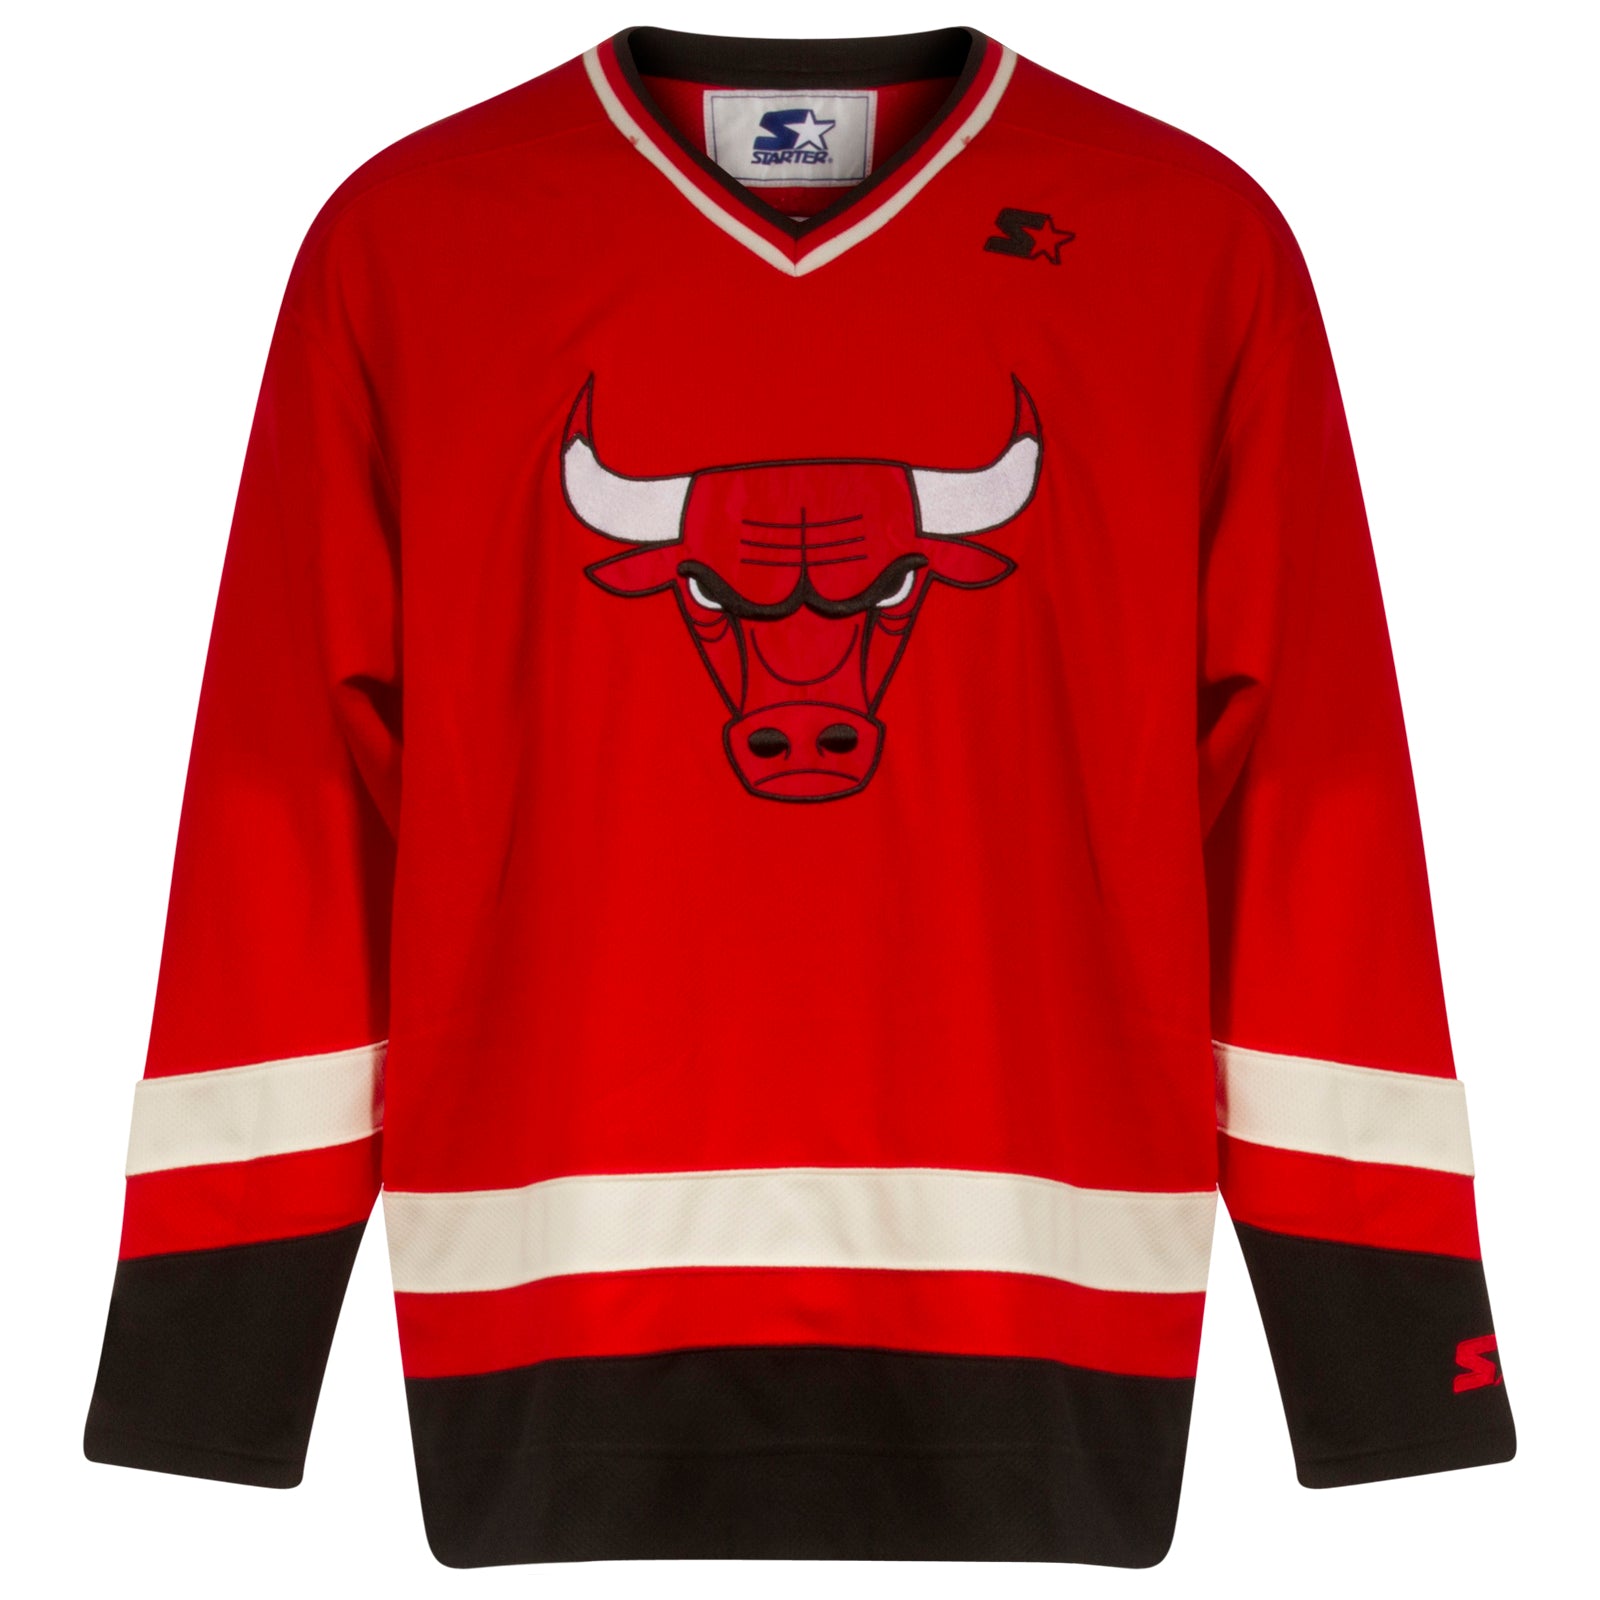 red hockey jersey